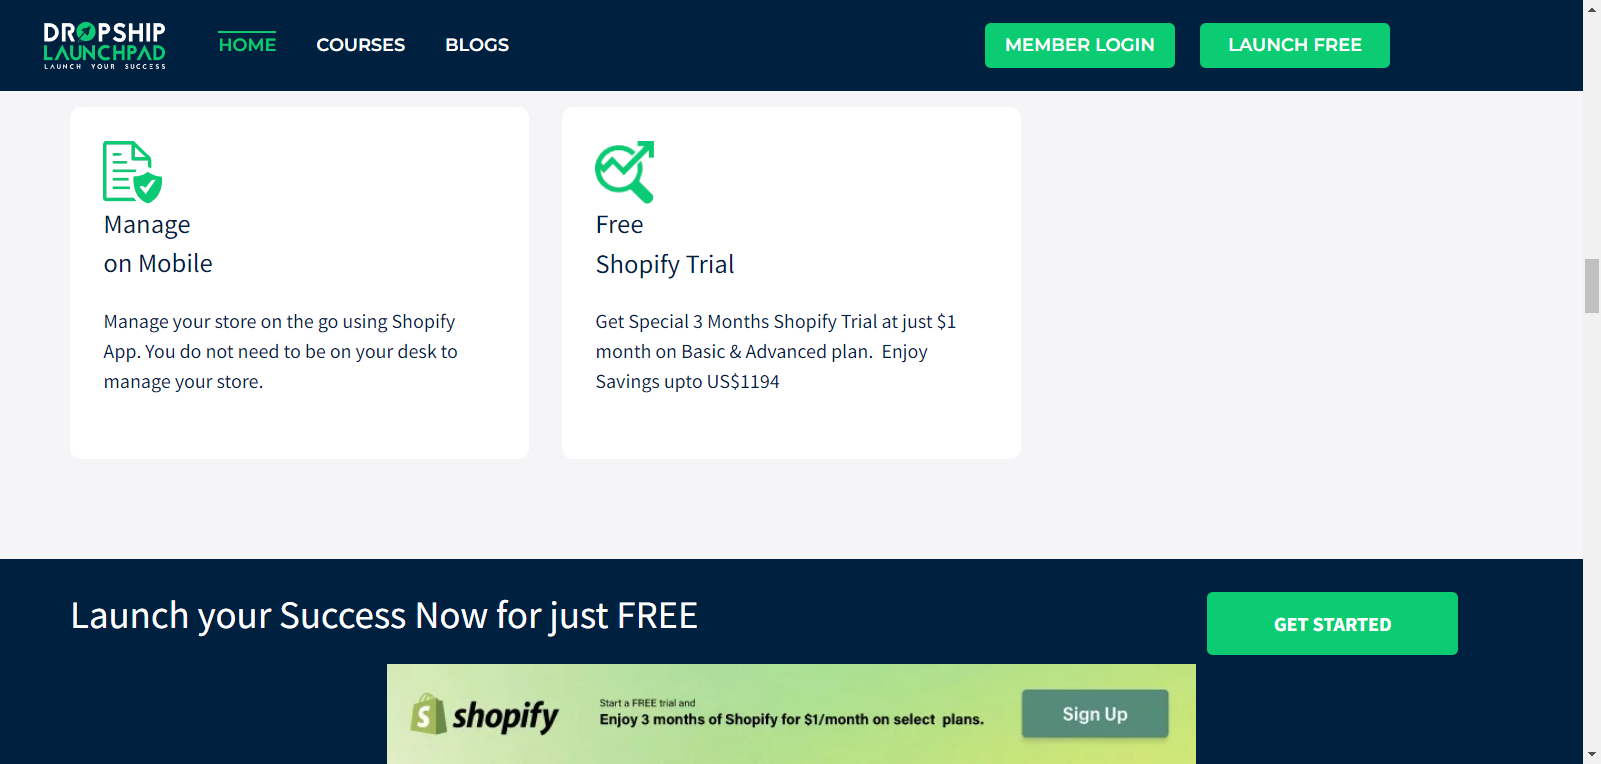 "Beauty E-Commerce Free Acquisition: Beyond Dropship Launchpad"